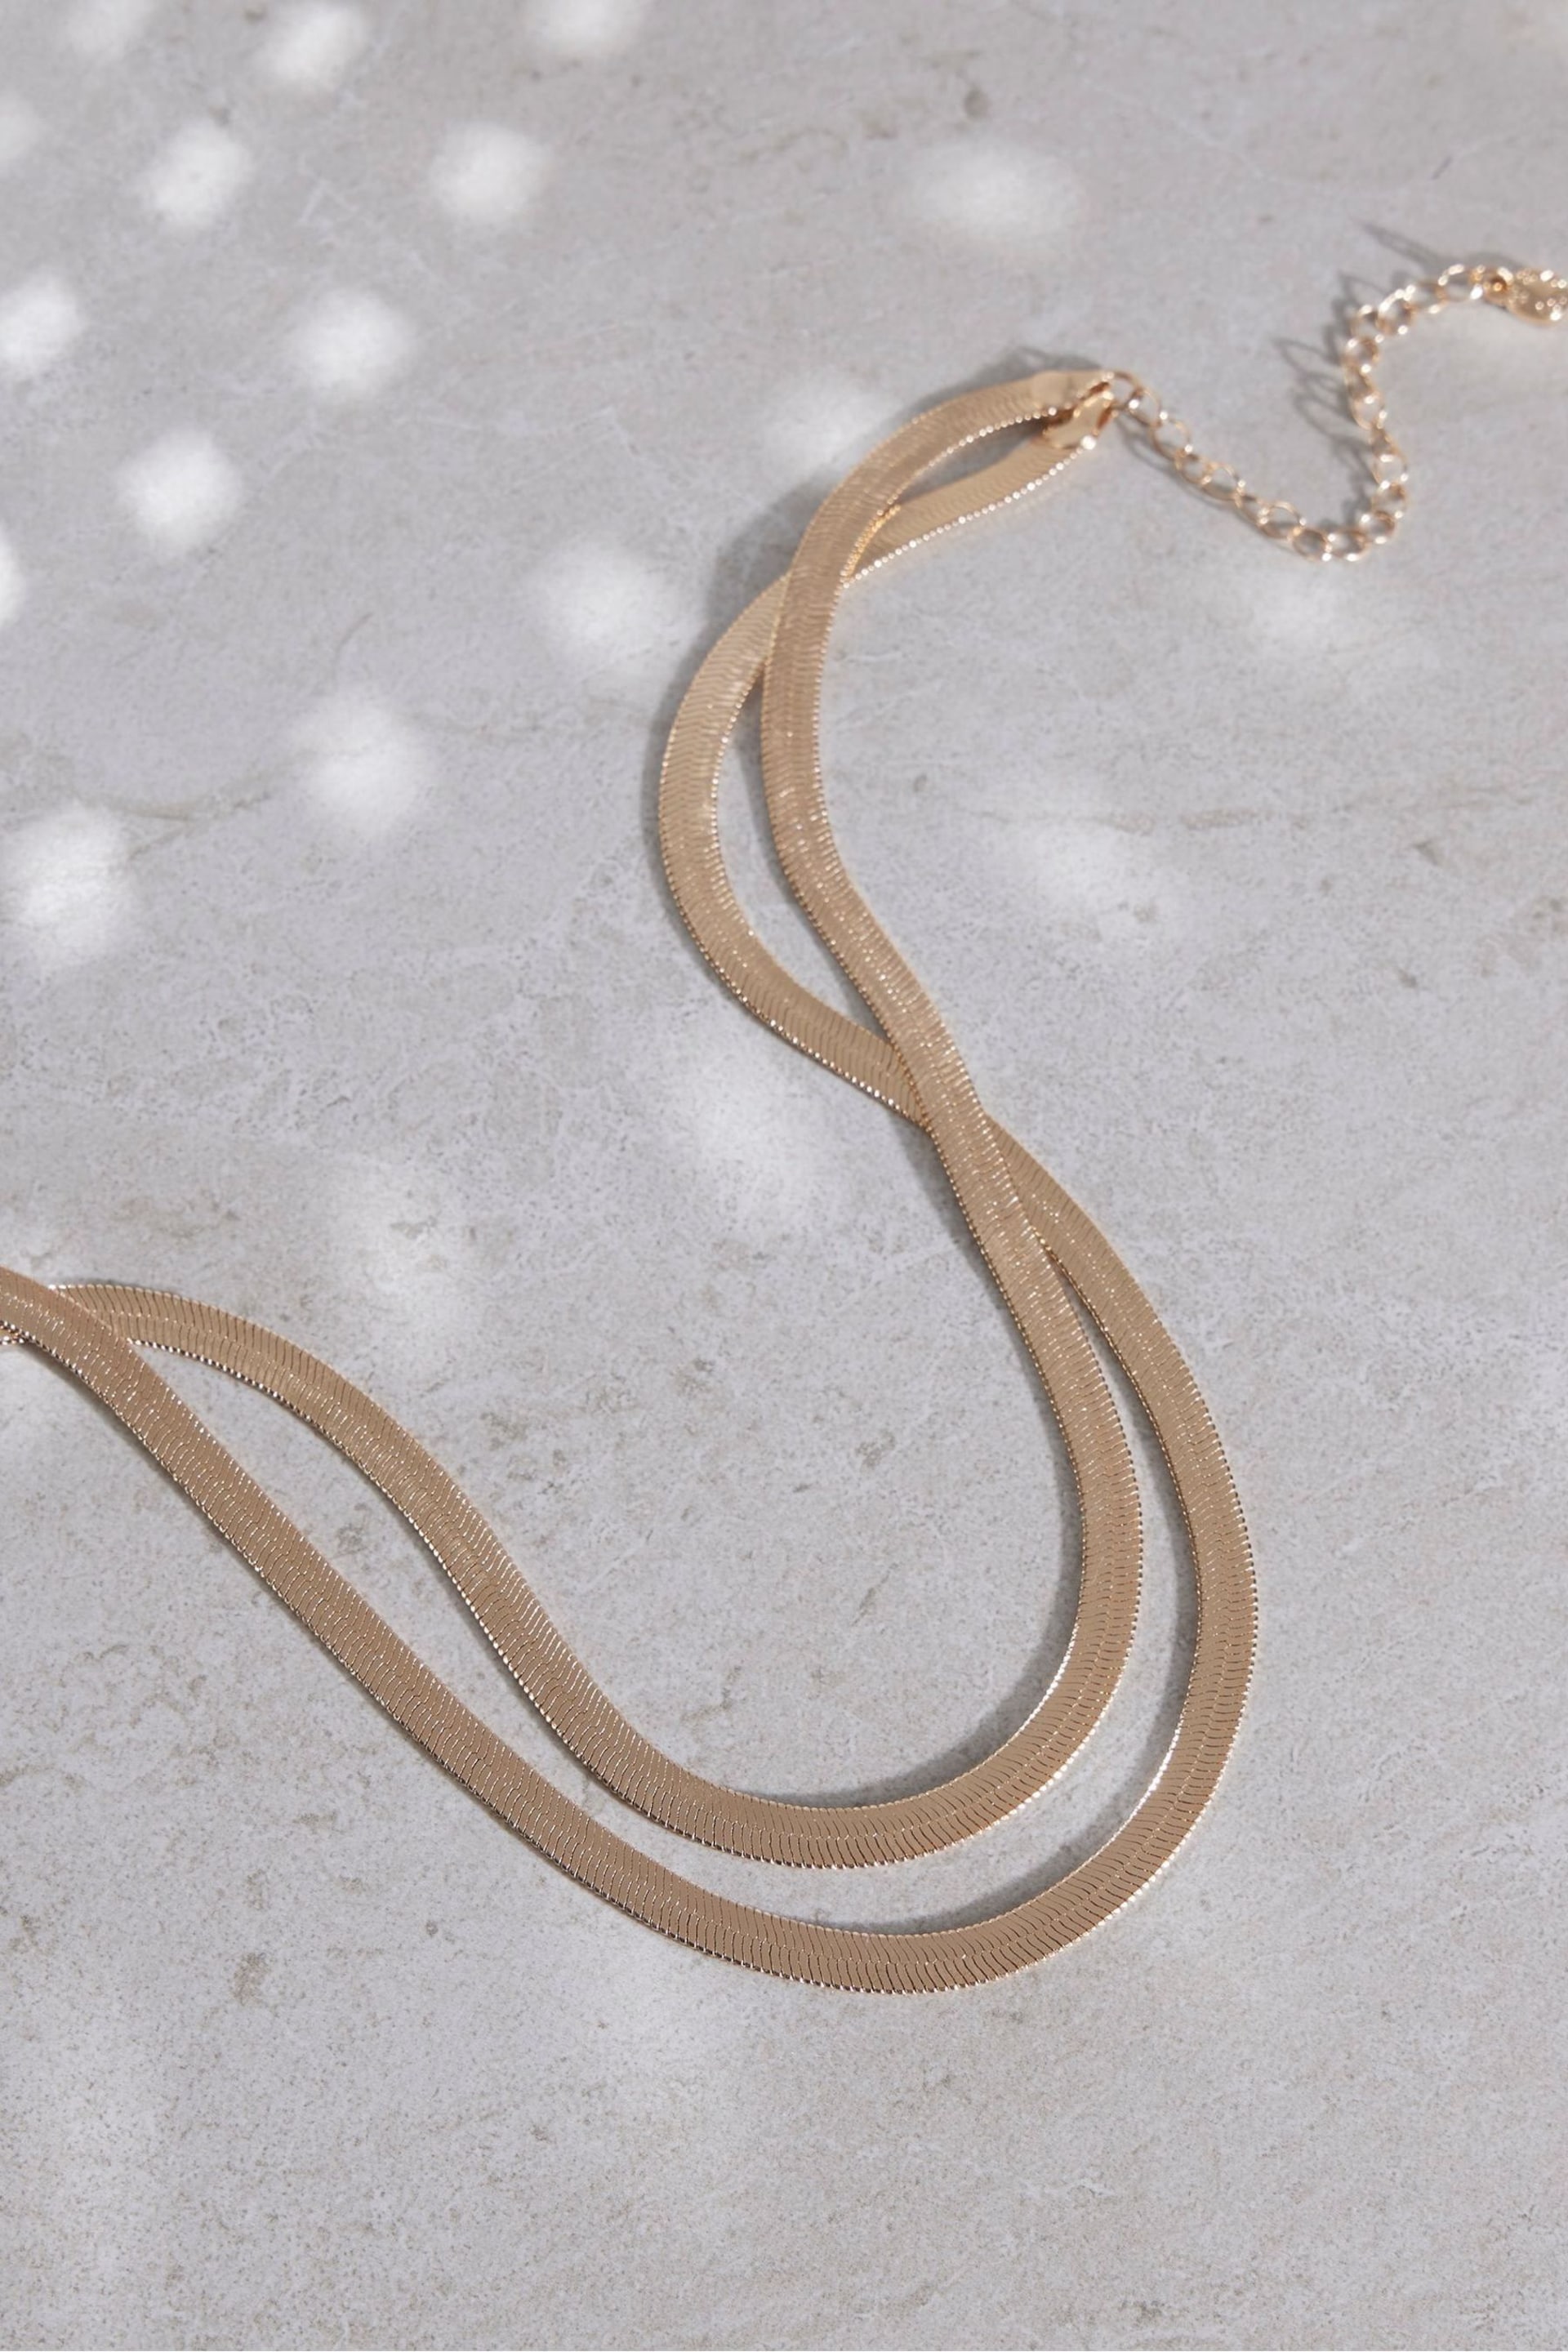 Mint Velvet Gold Tone Snake Necklace - Image 2 of 3